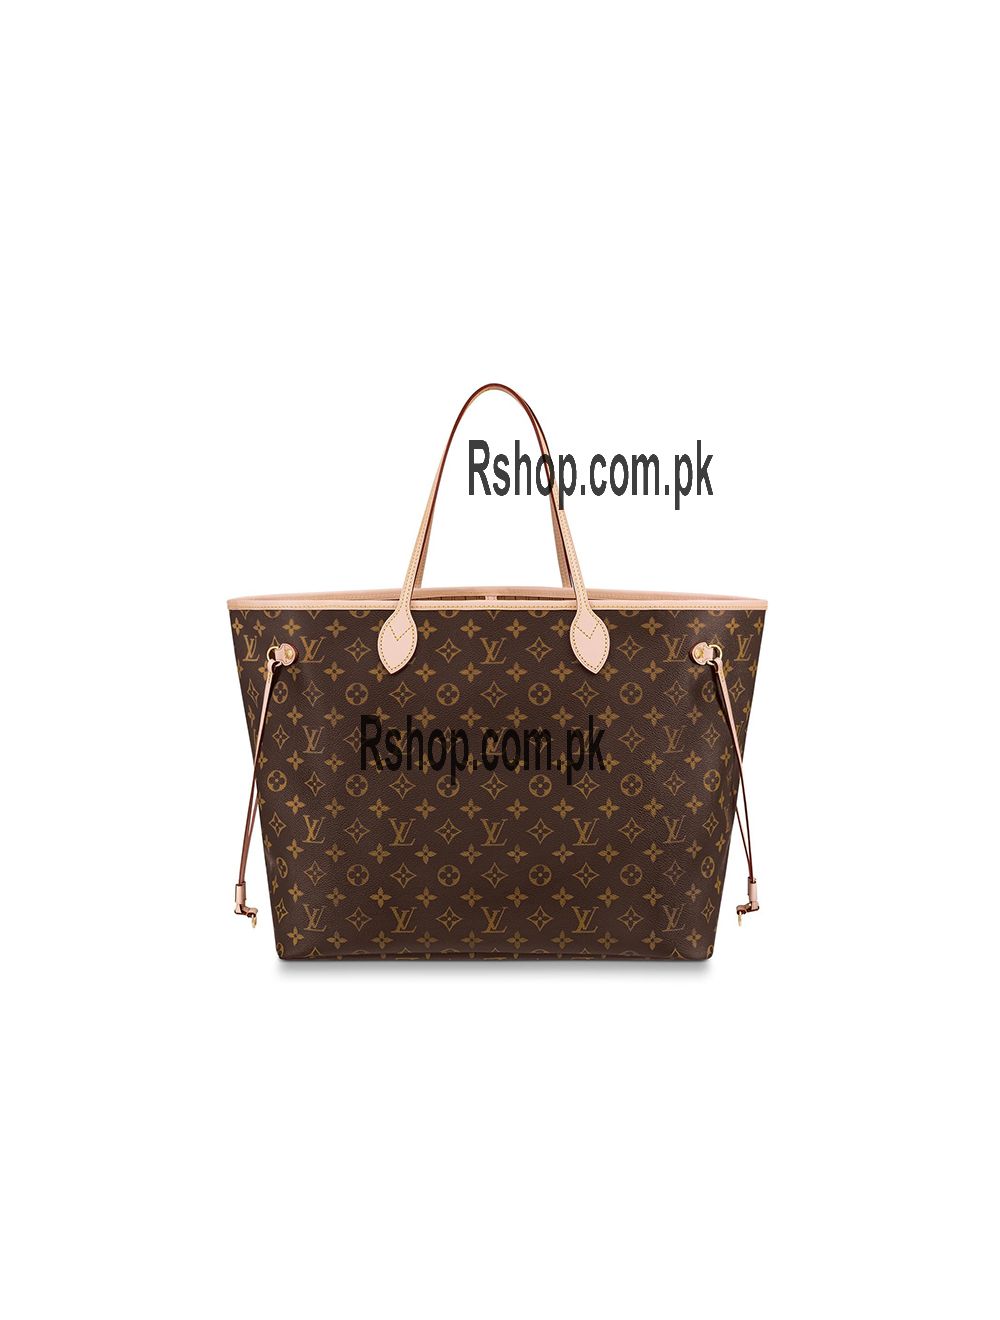 Buy Lv Leather Bag Online In Pakistan